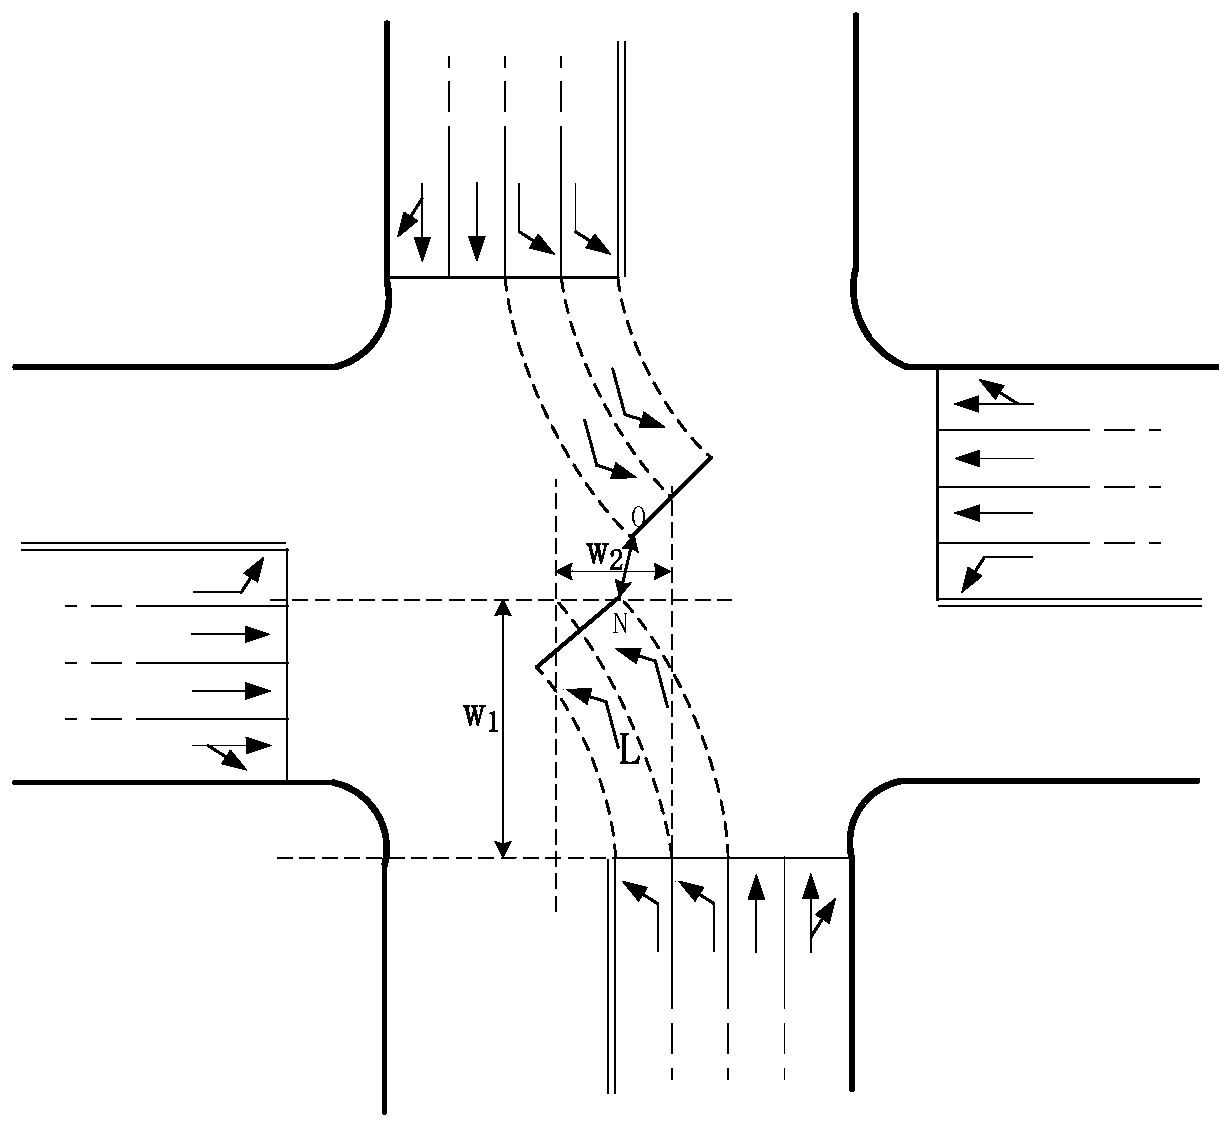 Plane intersection left turn waiting area setting evaluation method